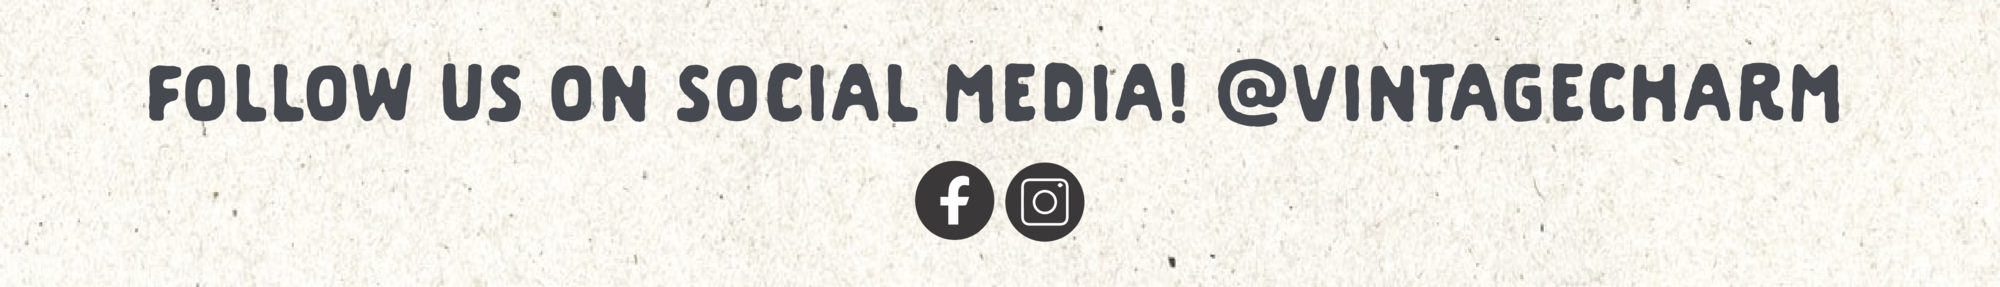 FOLLOW US ON SOCIAL MEDIA! @VINTAGECHARM e 06 